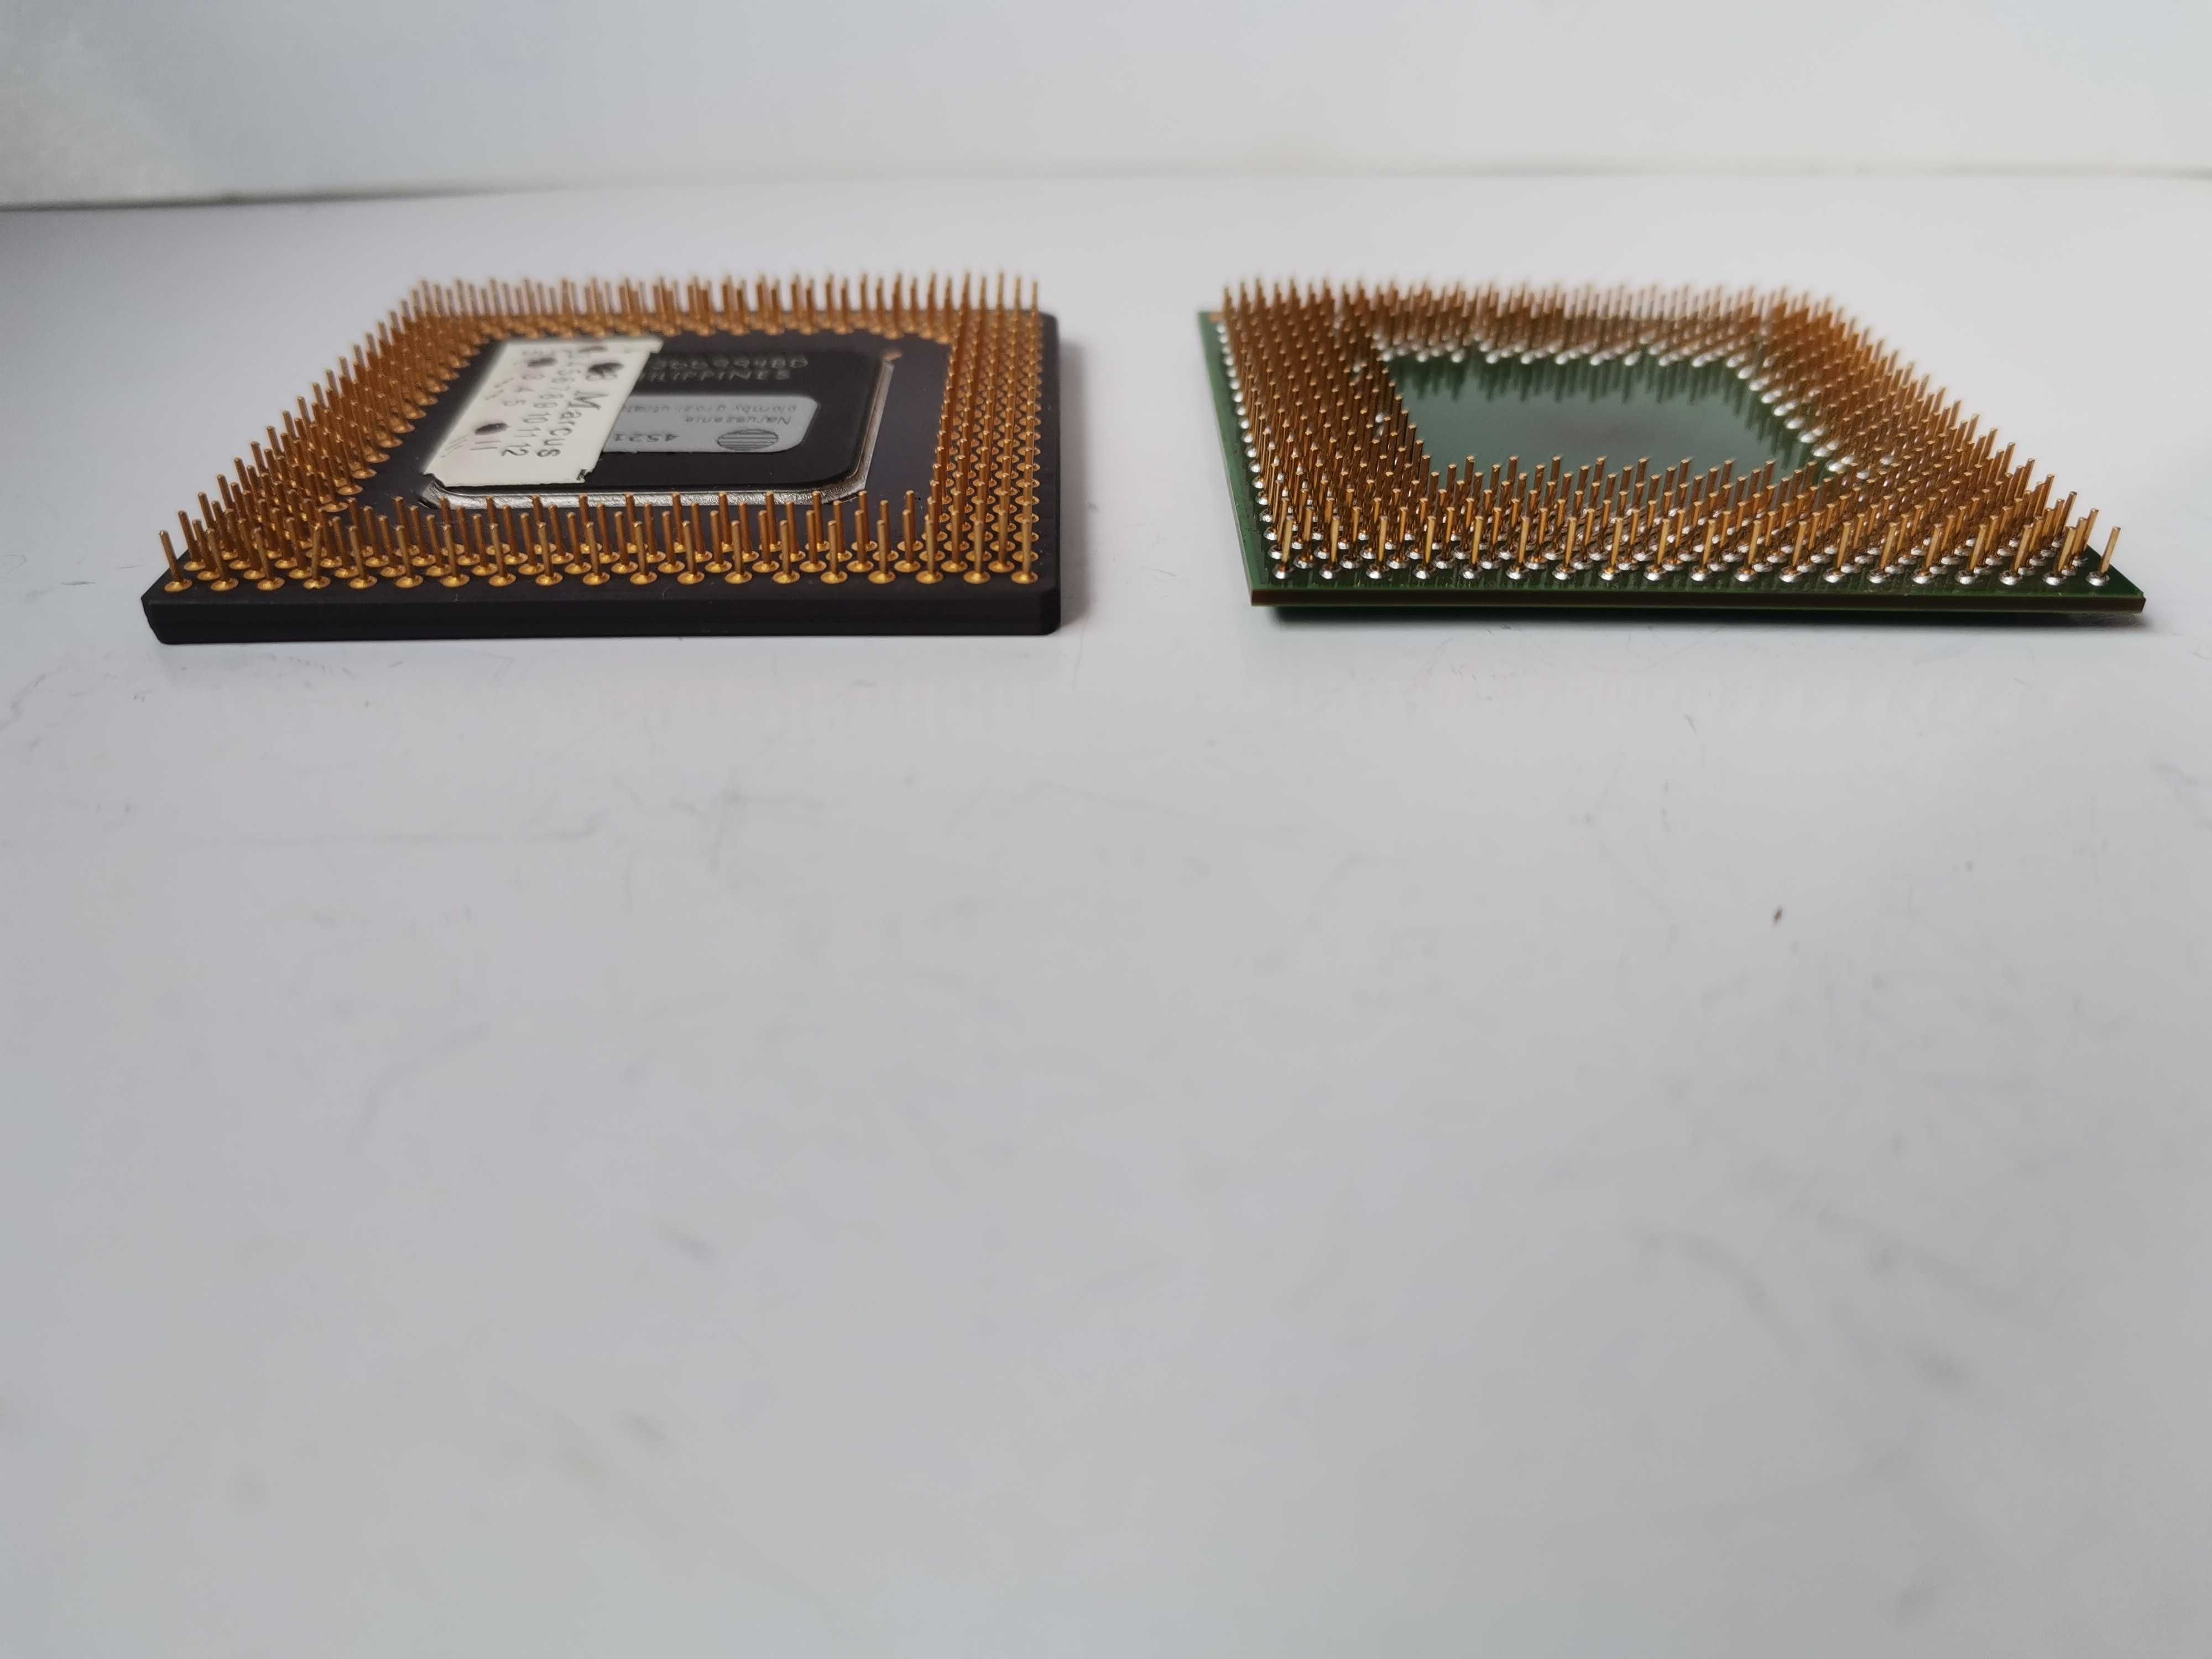 Procesor AMD ATHLON AXDA 1700 DUT 3C